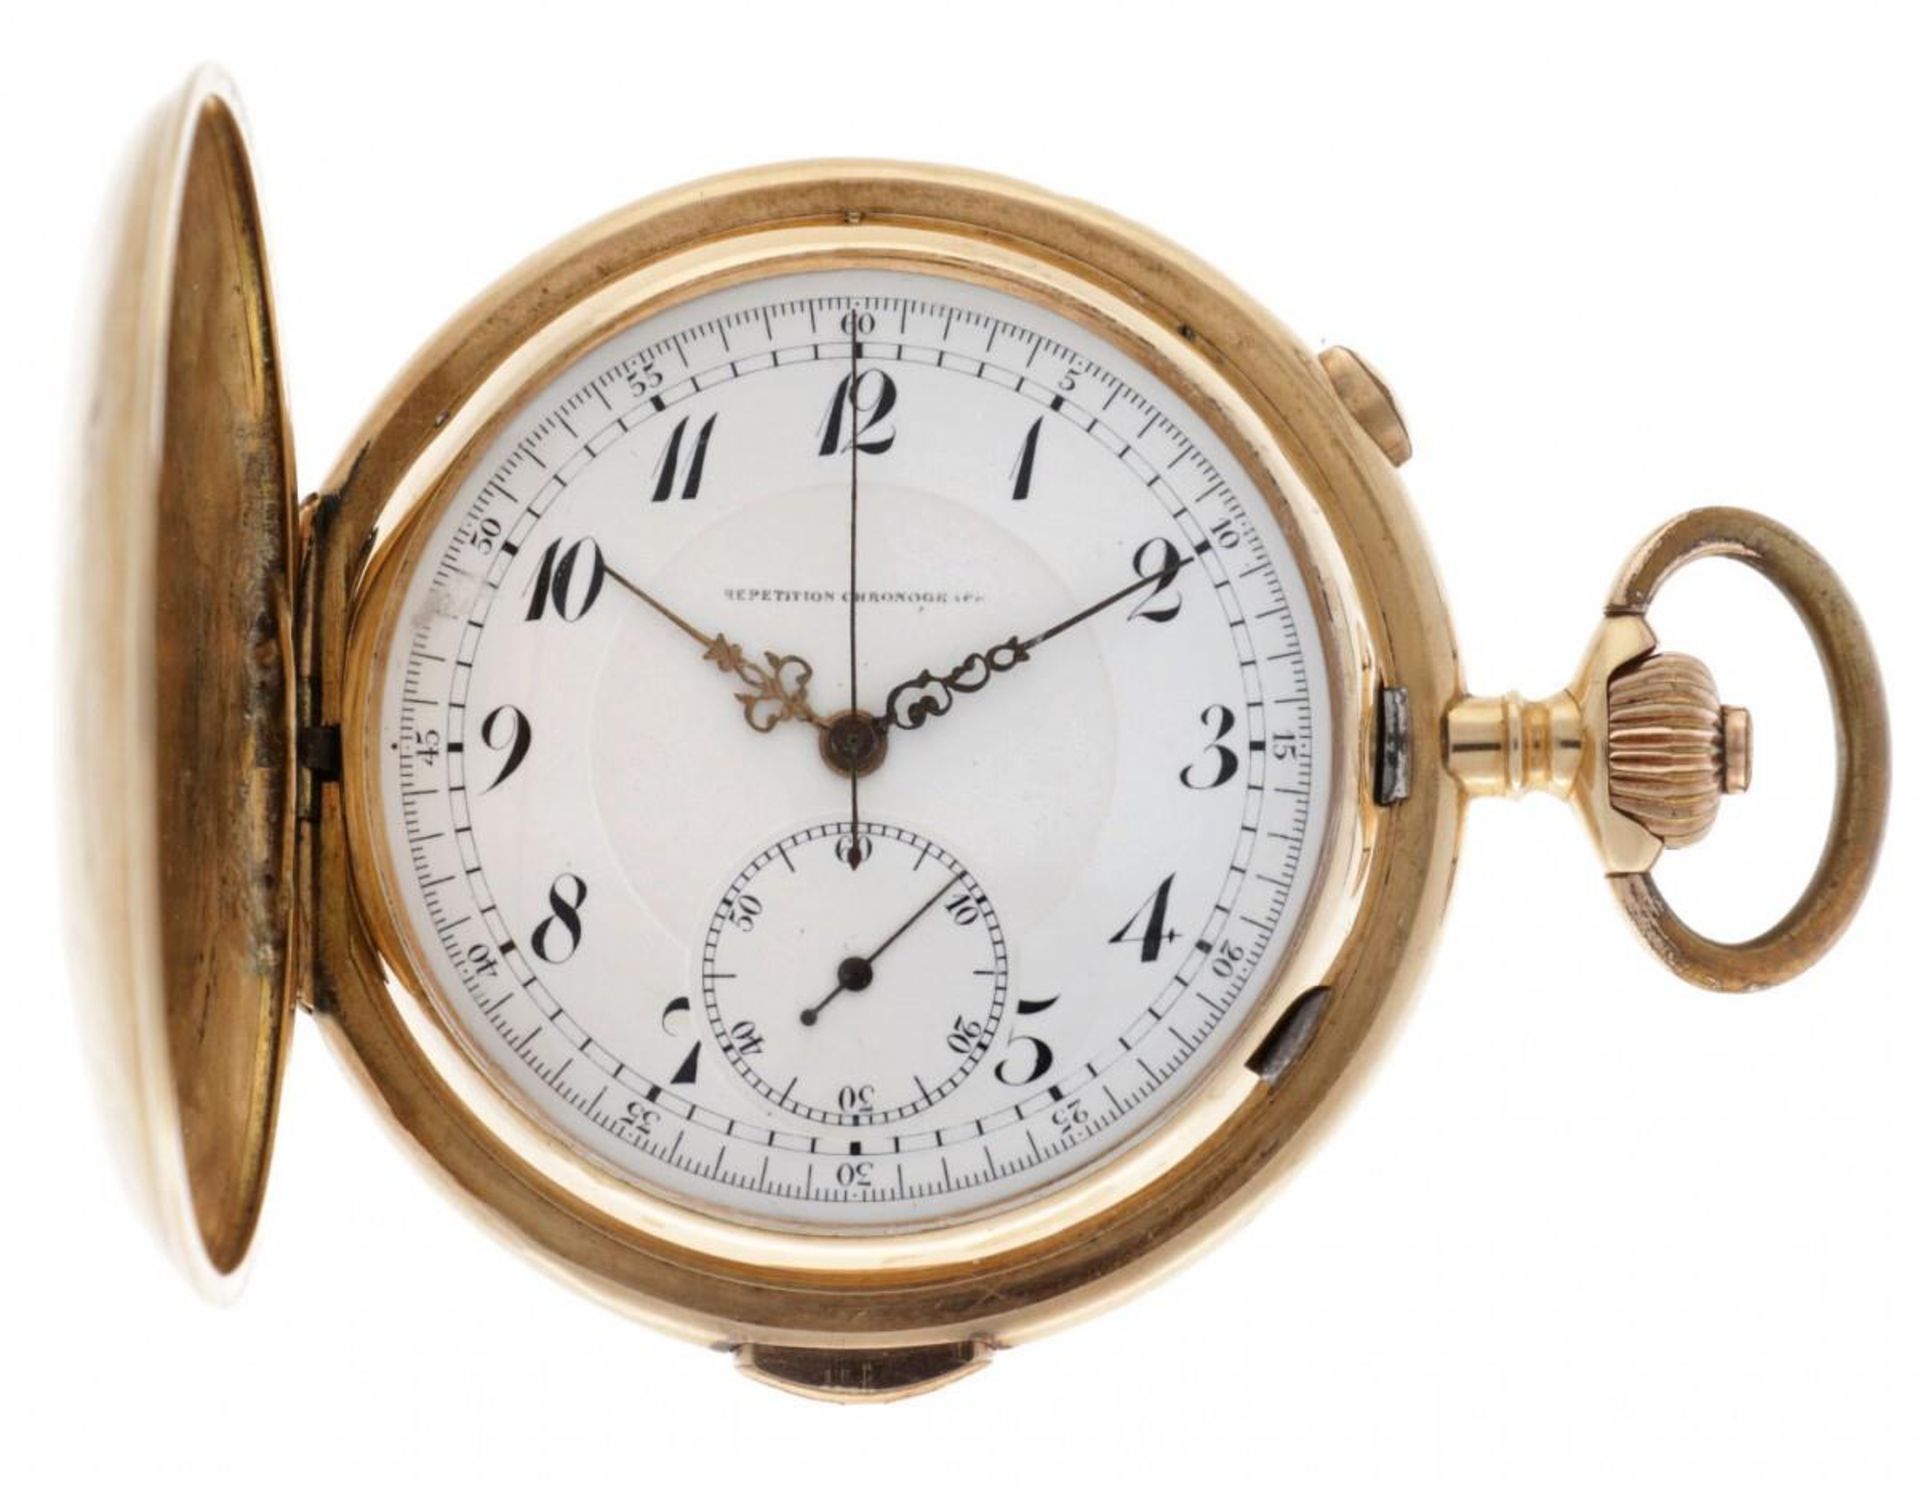 Golden Savonette Chronograph - Men's Pocket Watch - appr. 1889.